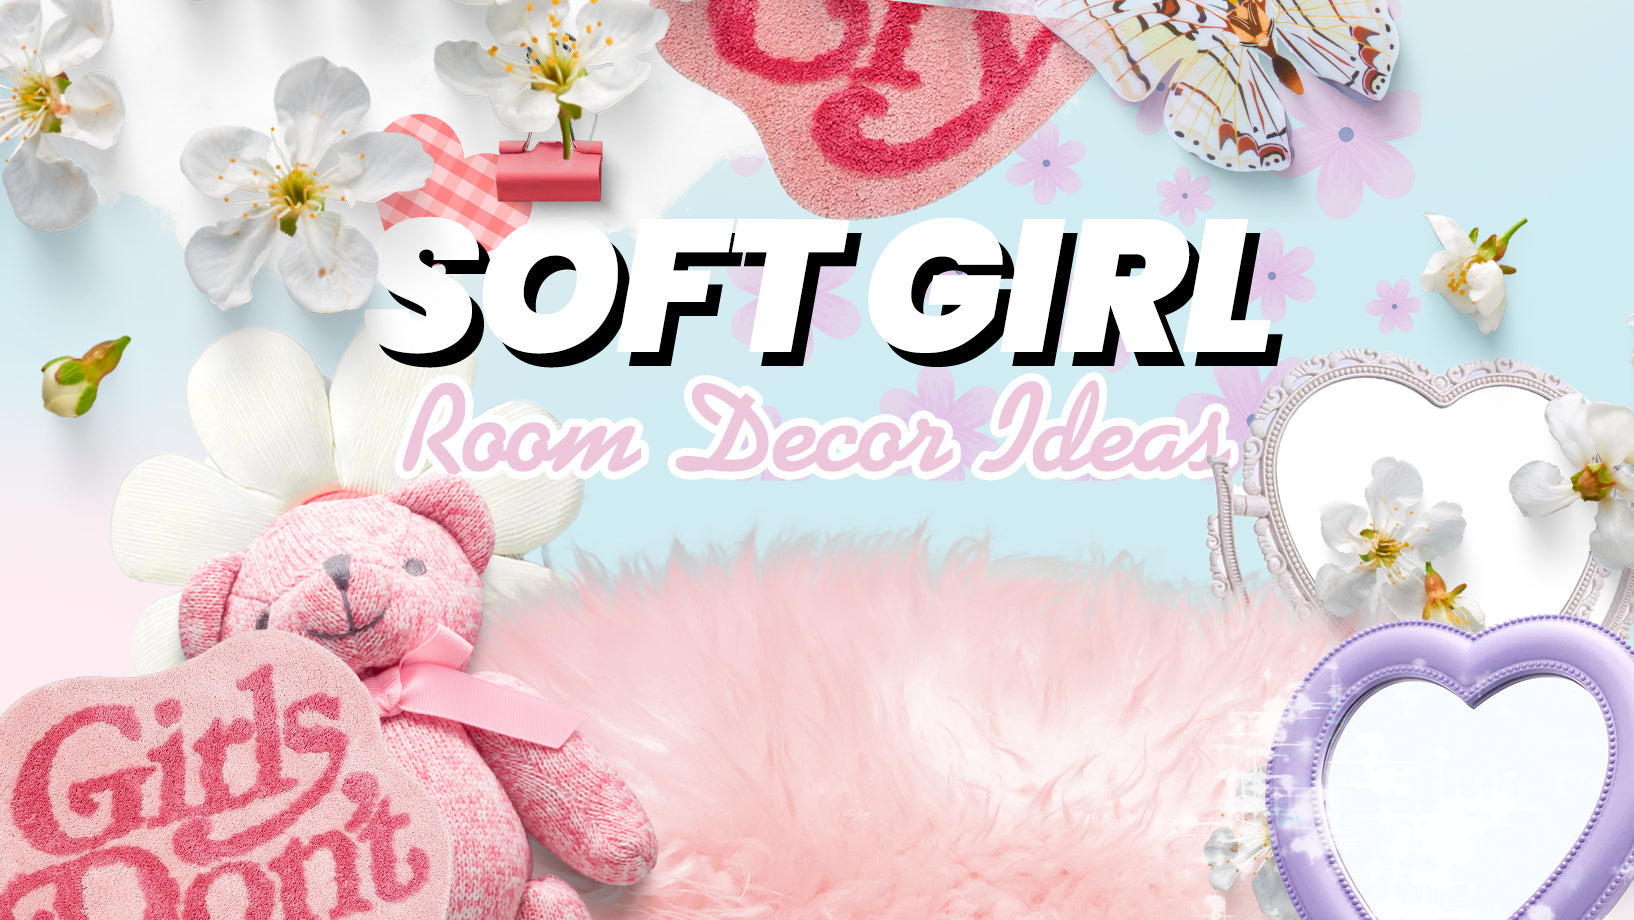 Kawaii Room Decor Aesthetic, Cute Pink Aesthetic Room Decor For Teen Girls